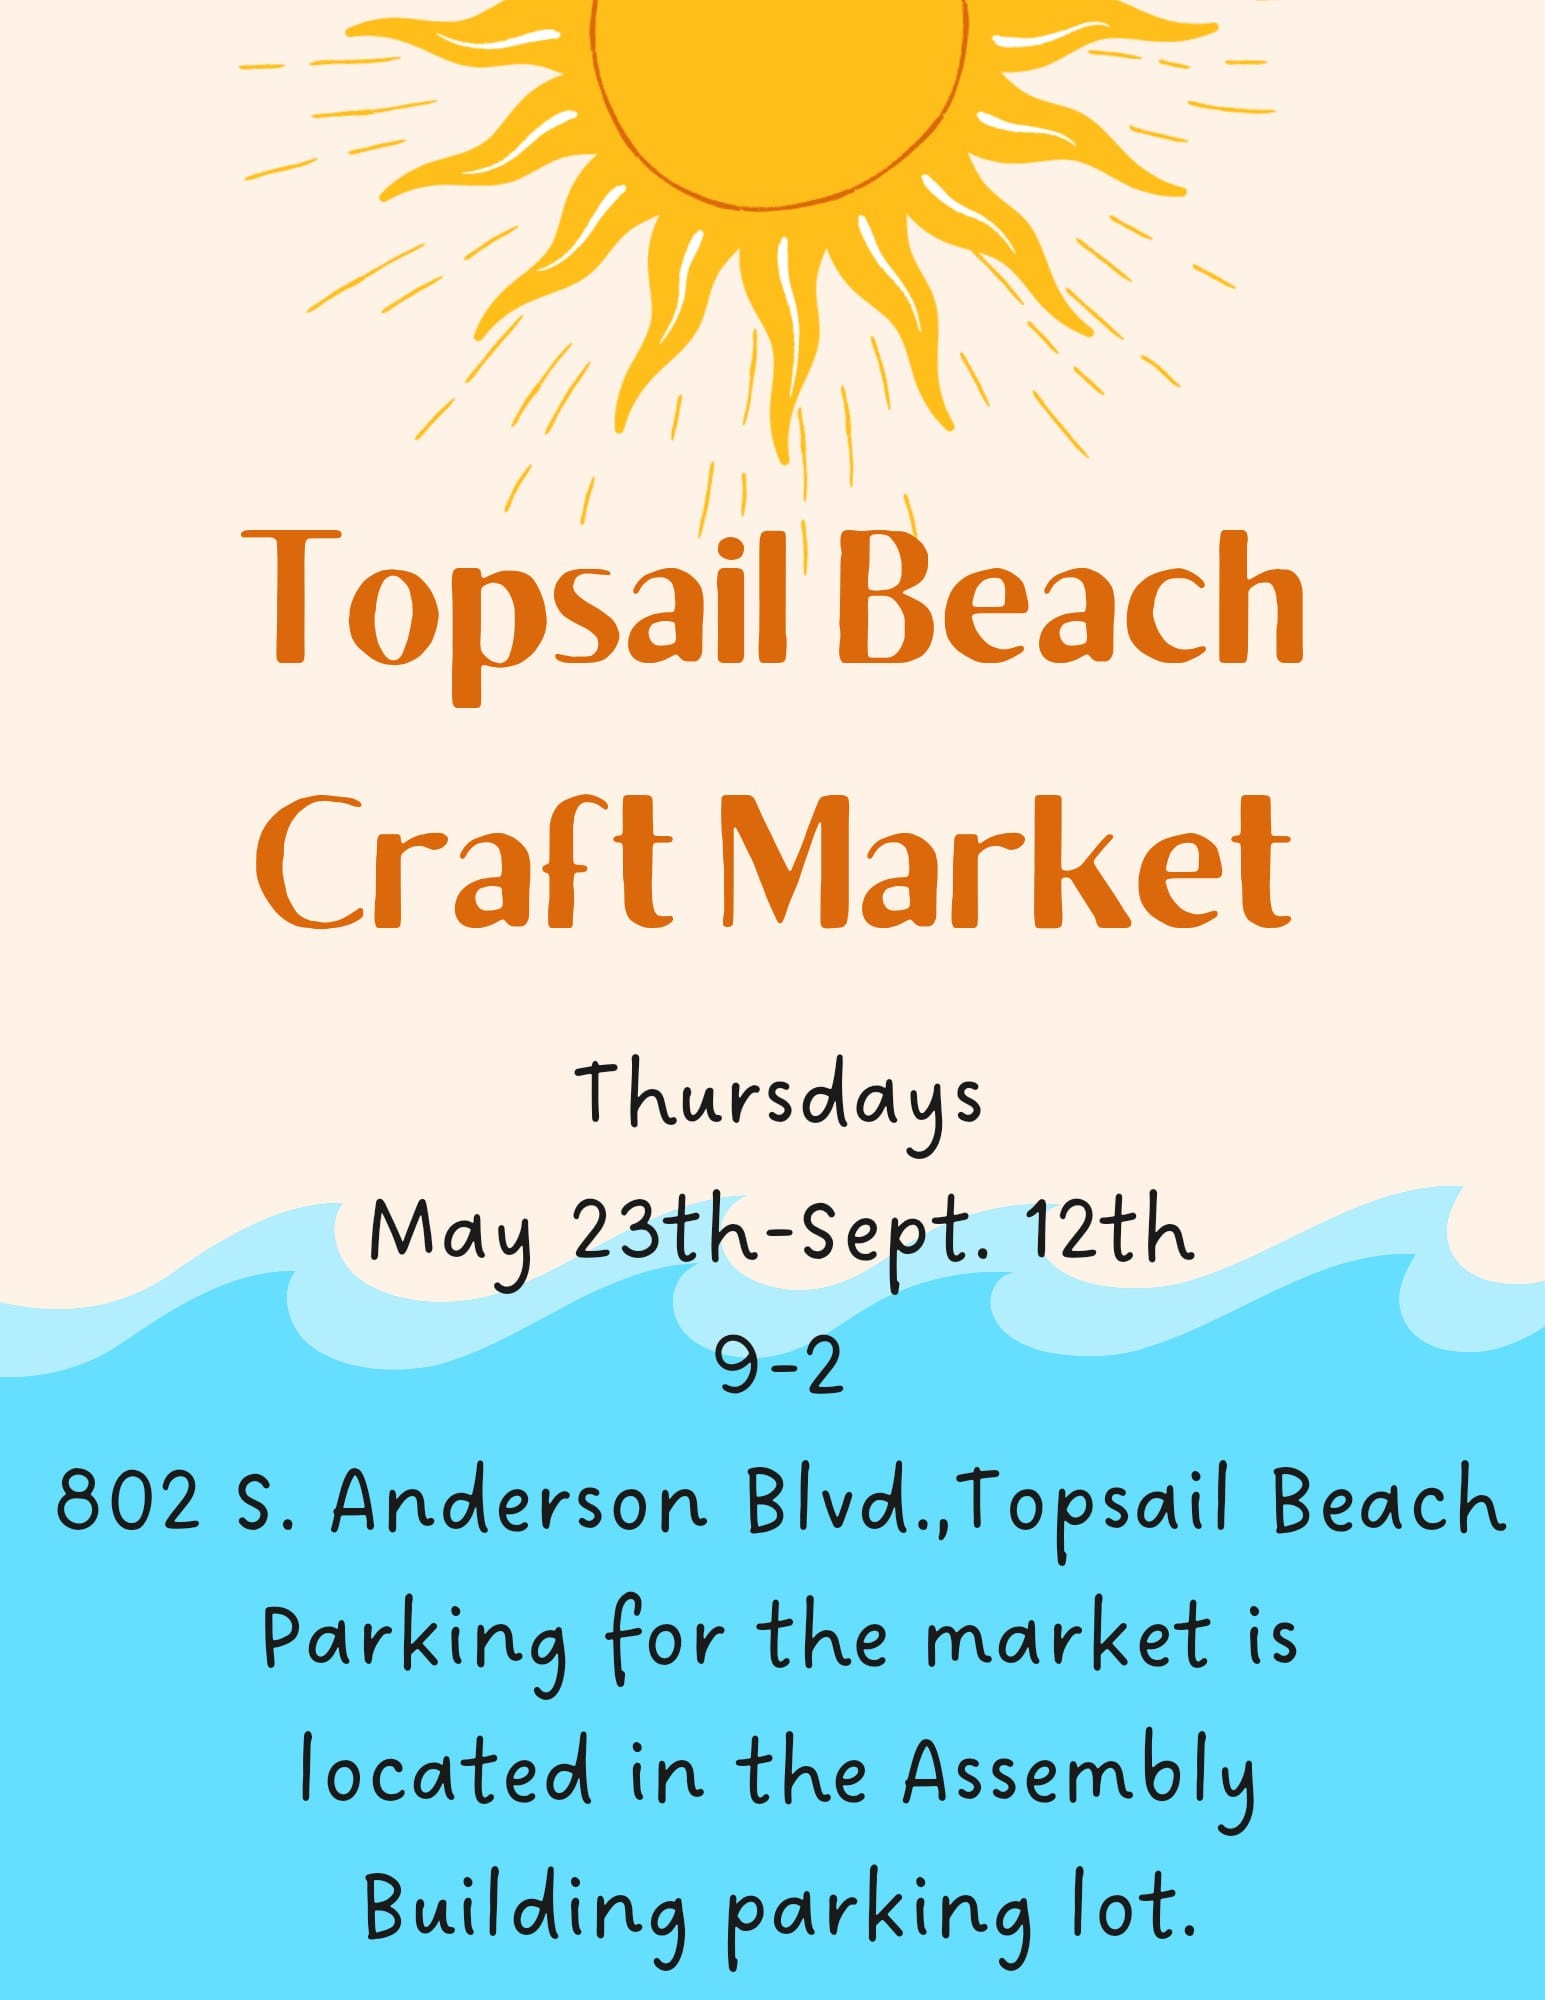 Topsail Beach Craft Market